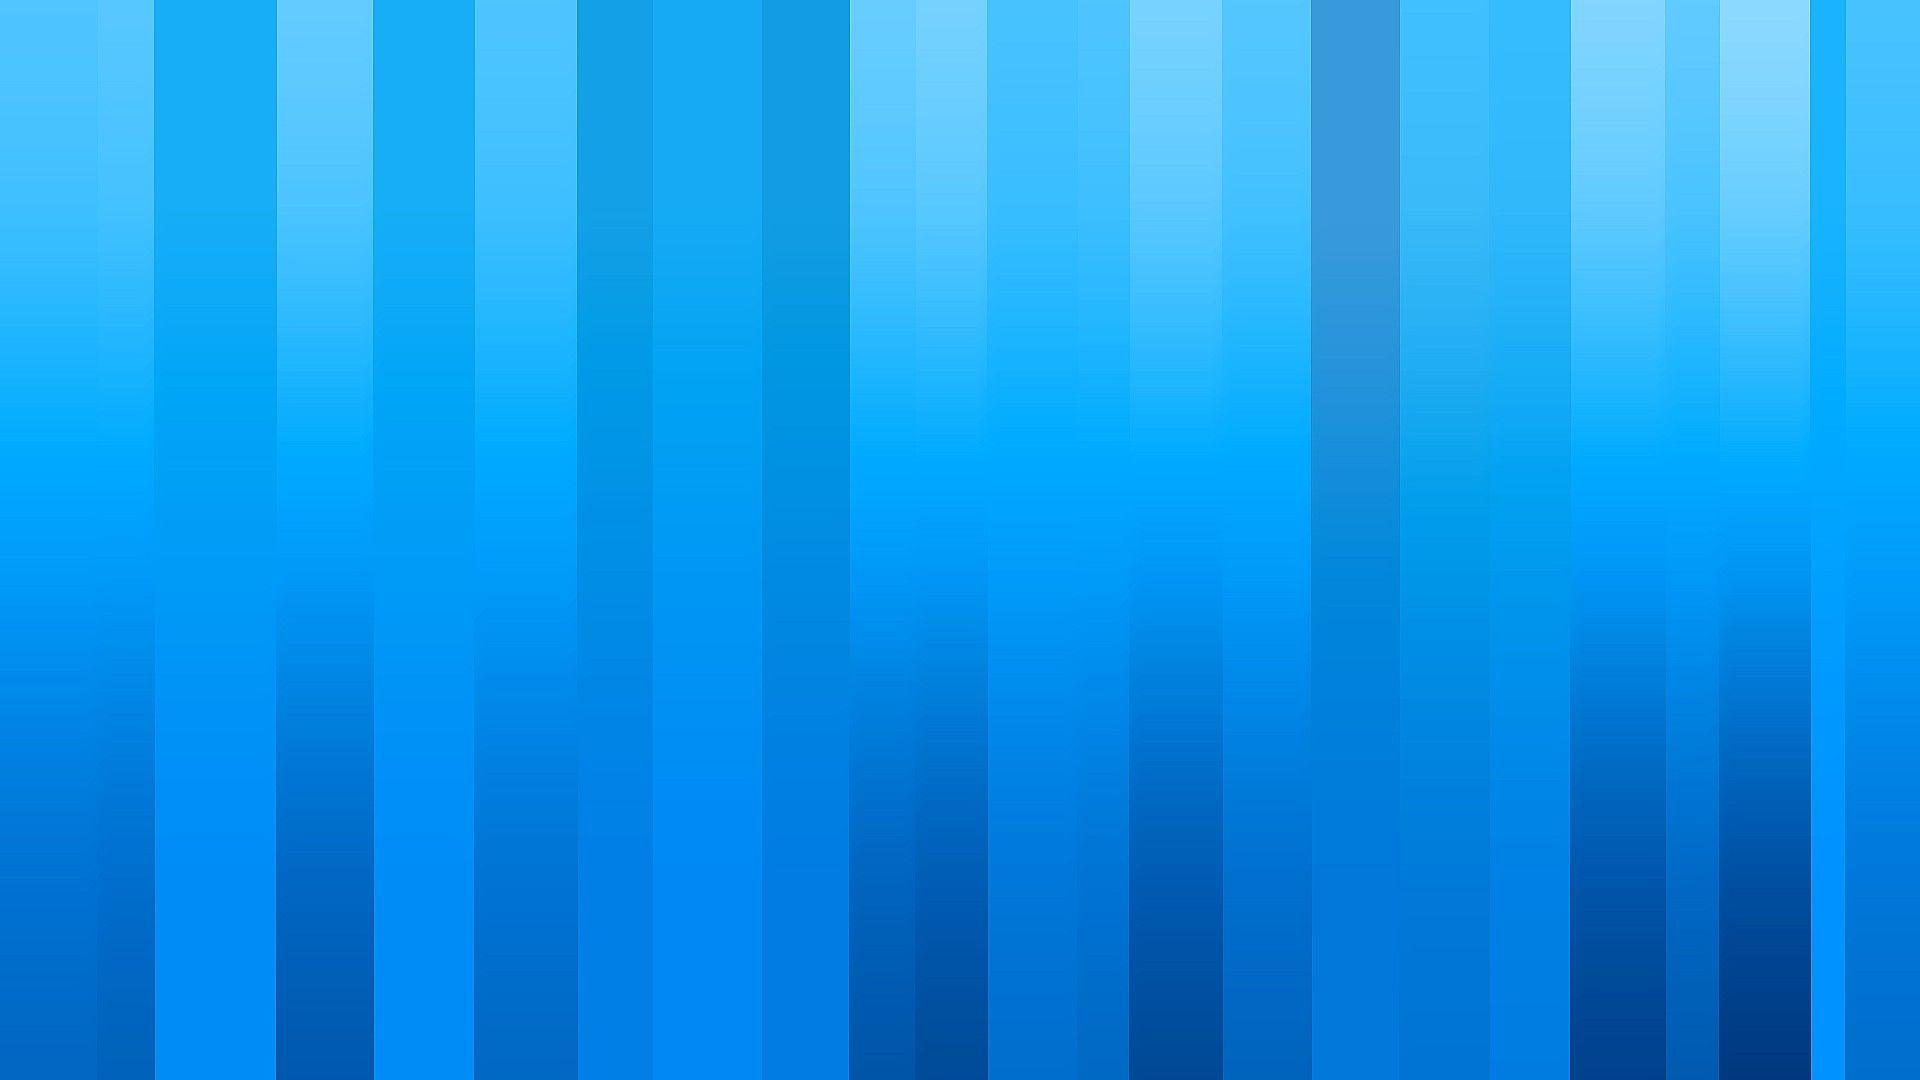 Blue Lines Wallpaper 00365